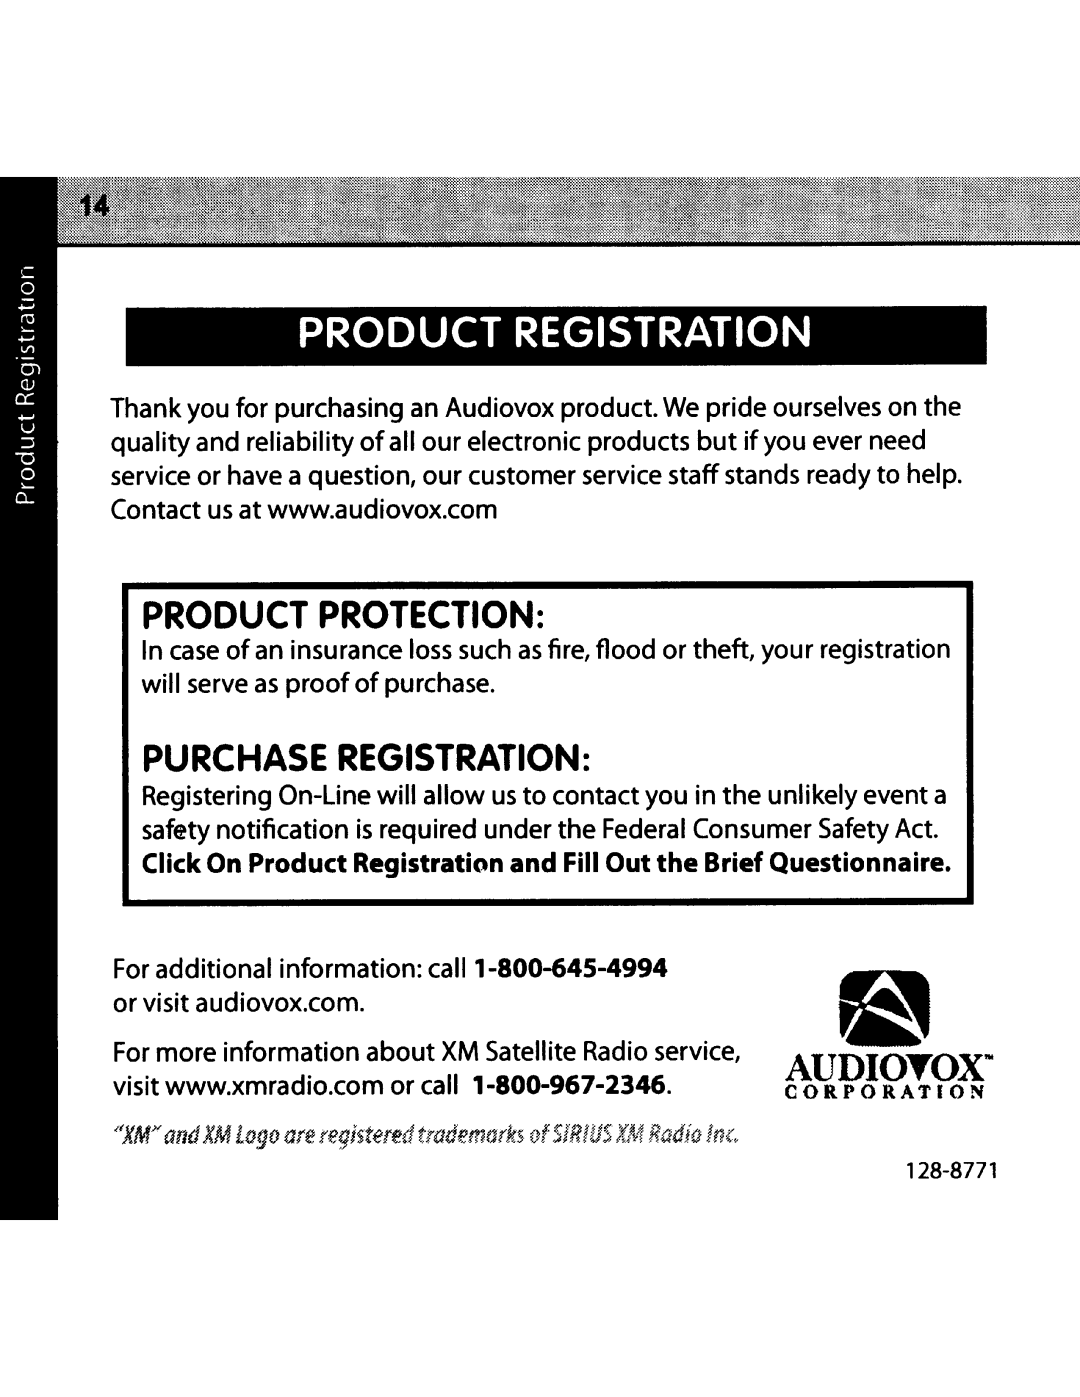 Audiovox CNP2000UCA manual Audiotoxn, Product Registration, Product Protection, Purchase Registration 